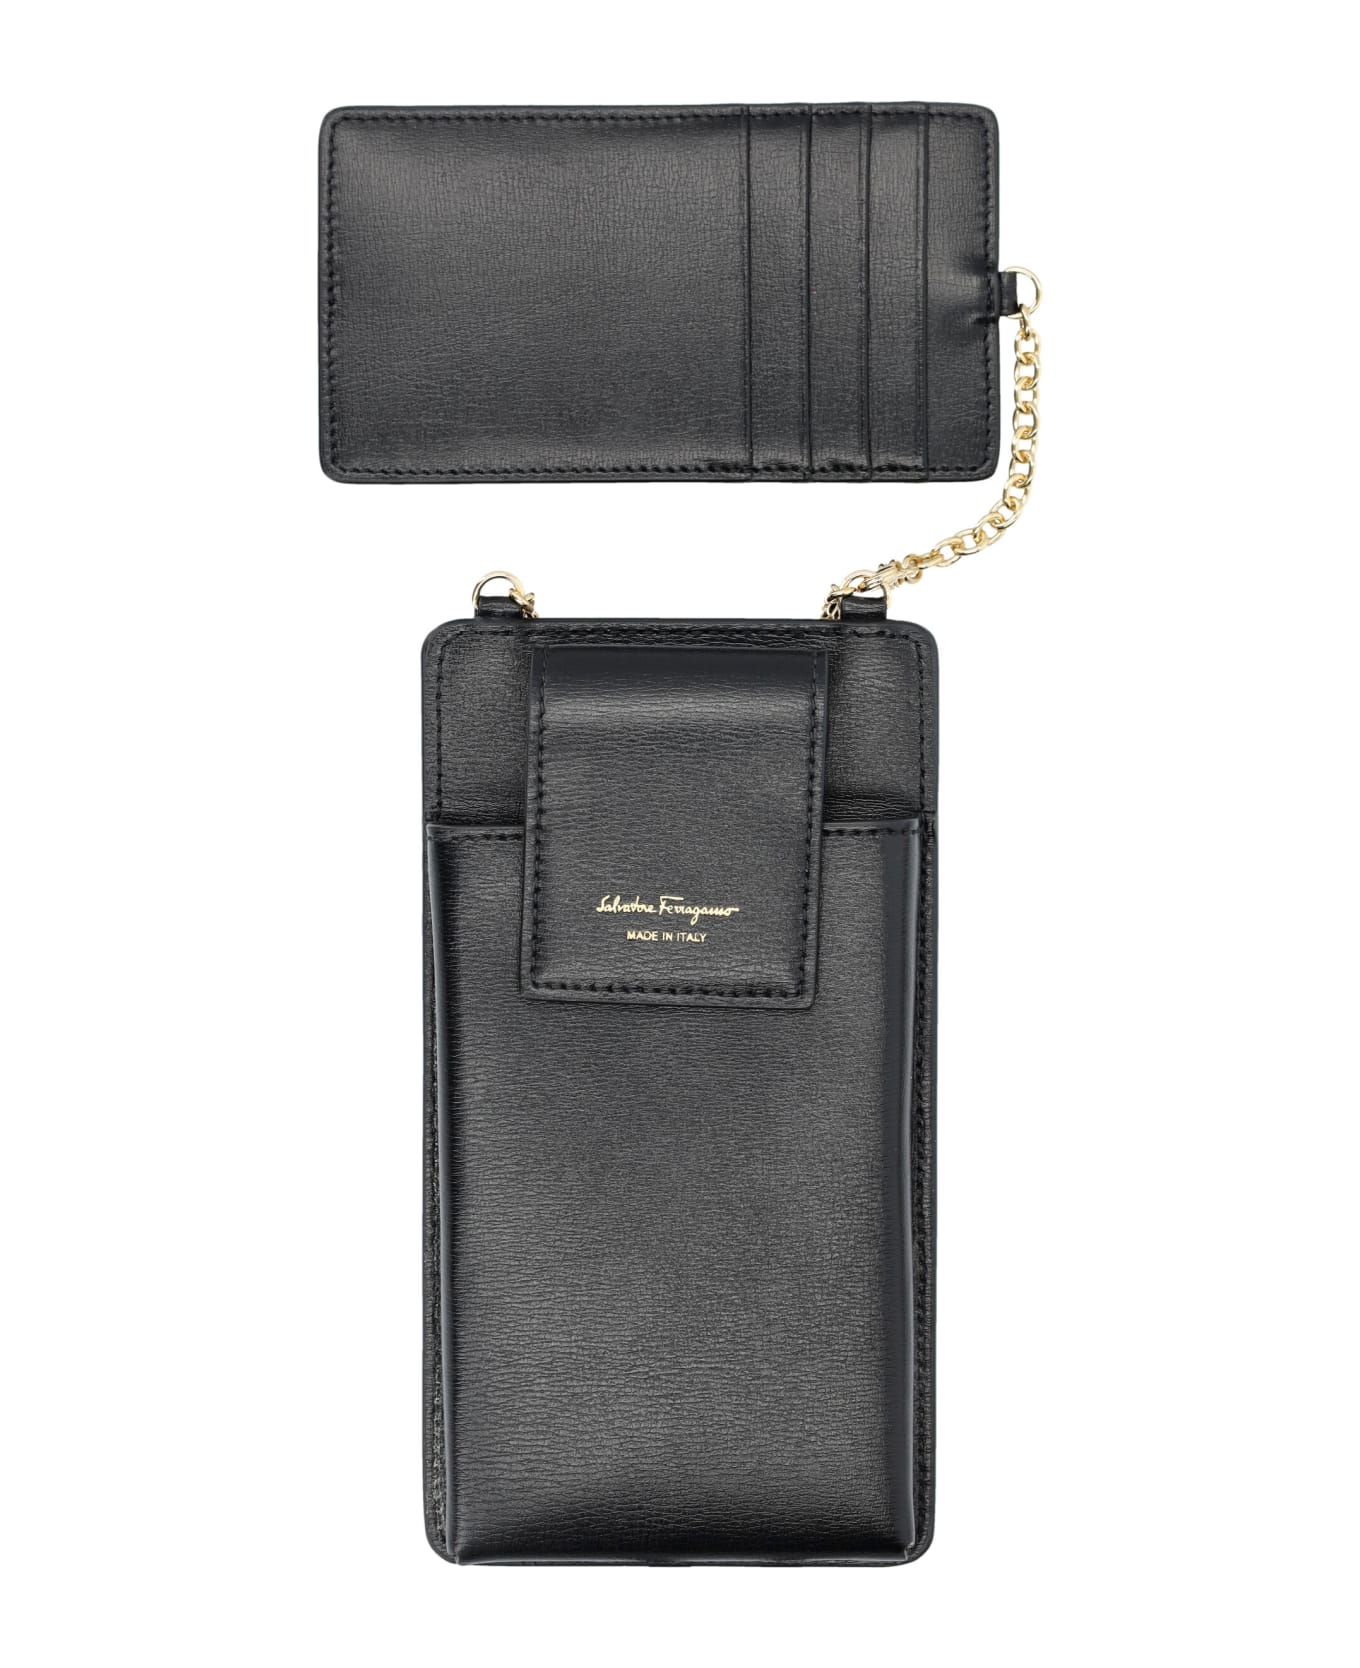 Ferragamo Vara Bow Smartphone Case - Add to bag